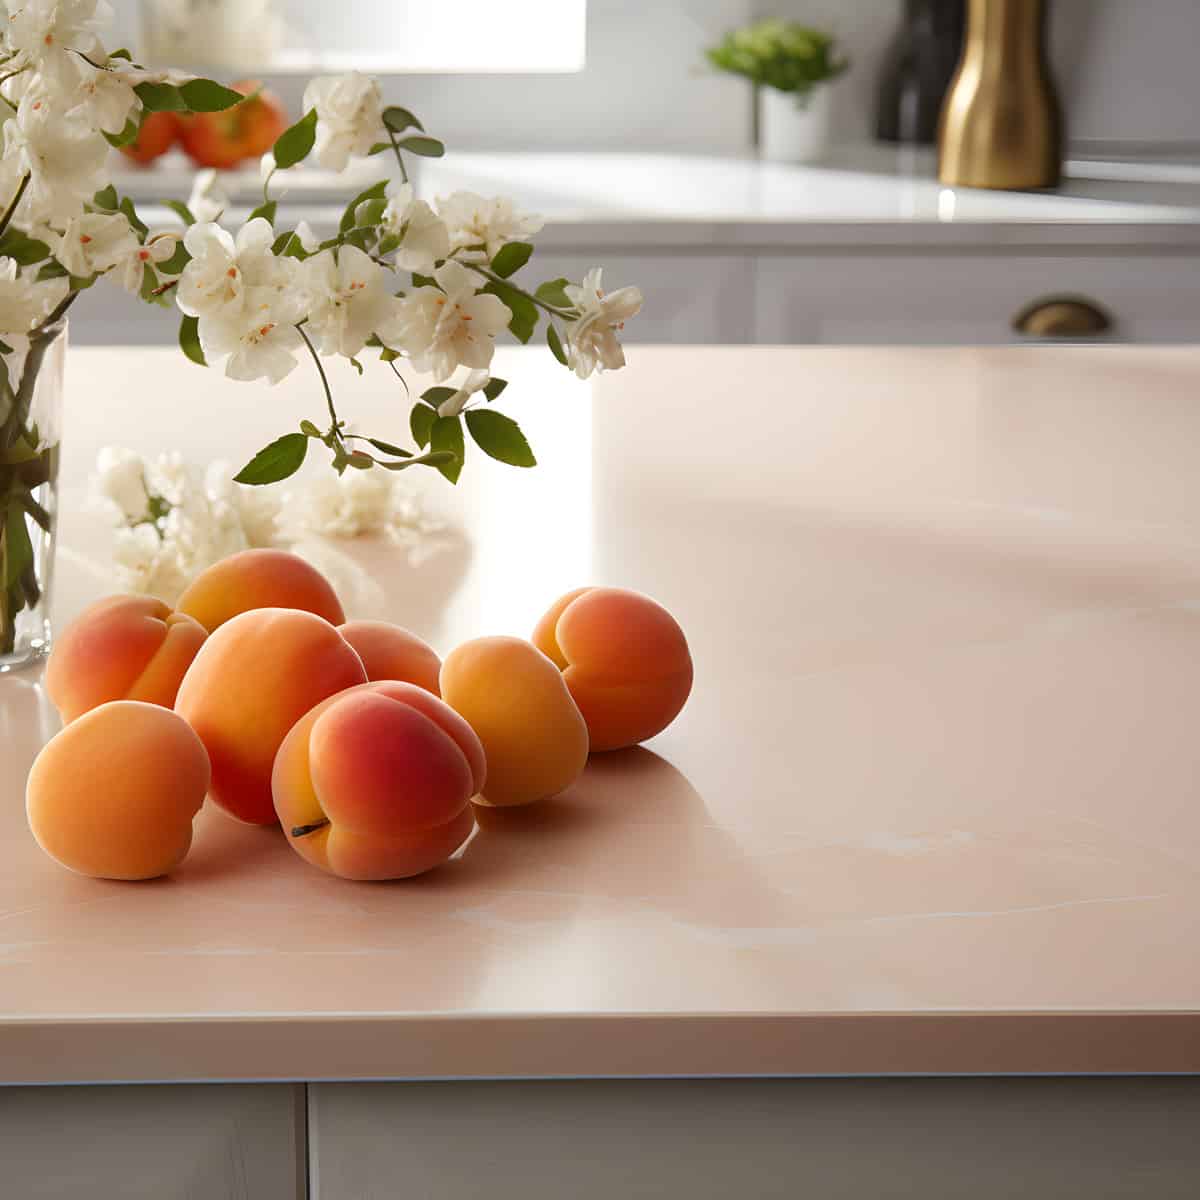 Brianon Apricot on a kitchen counter